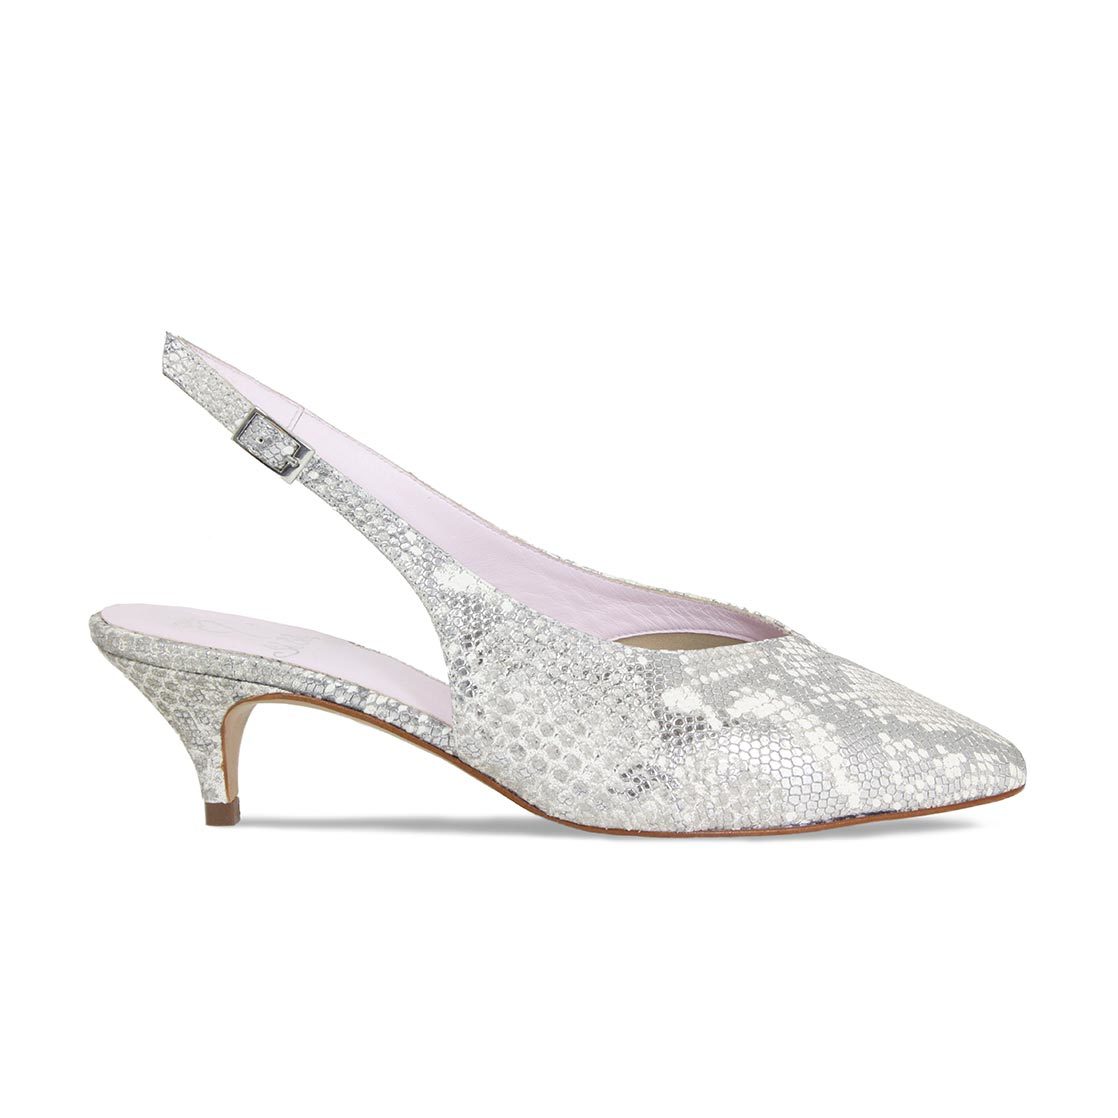 Sole Bliss shoes' bestseller is Duchess Camilla's favourite kitten heel ...